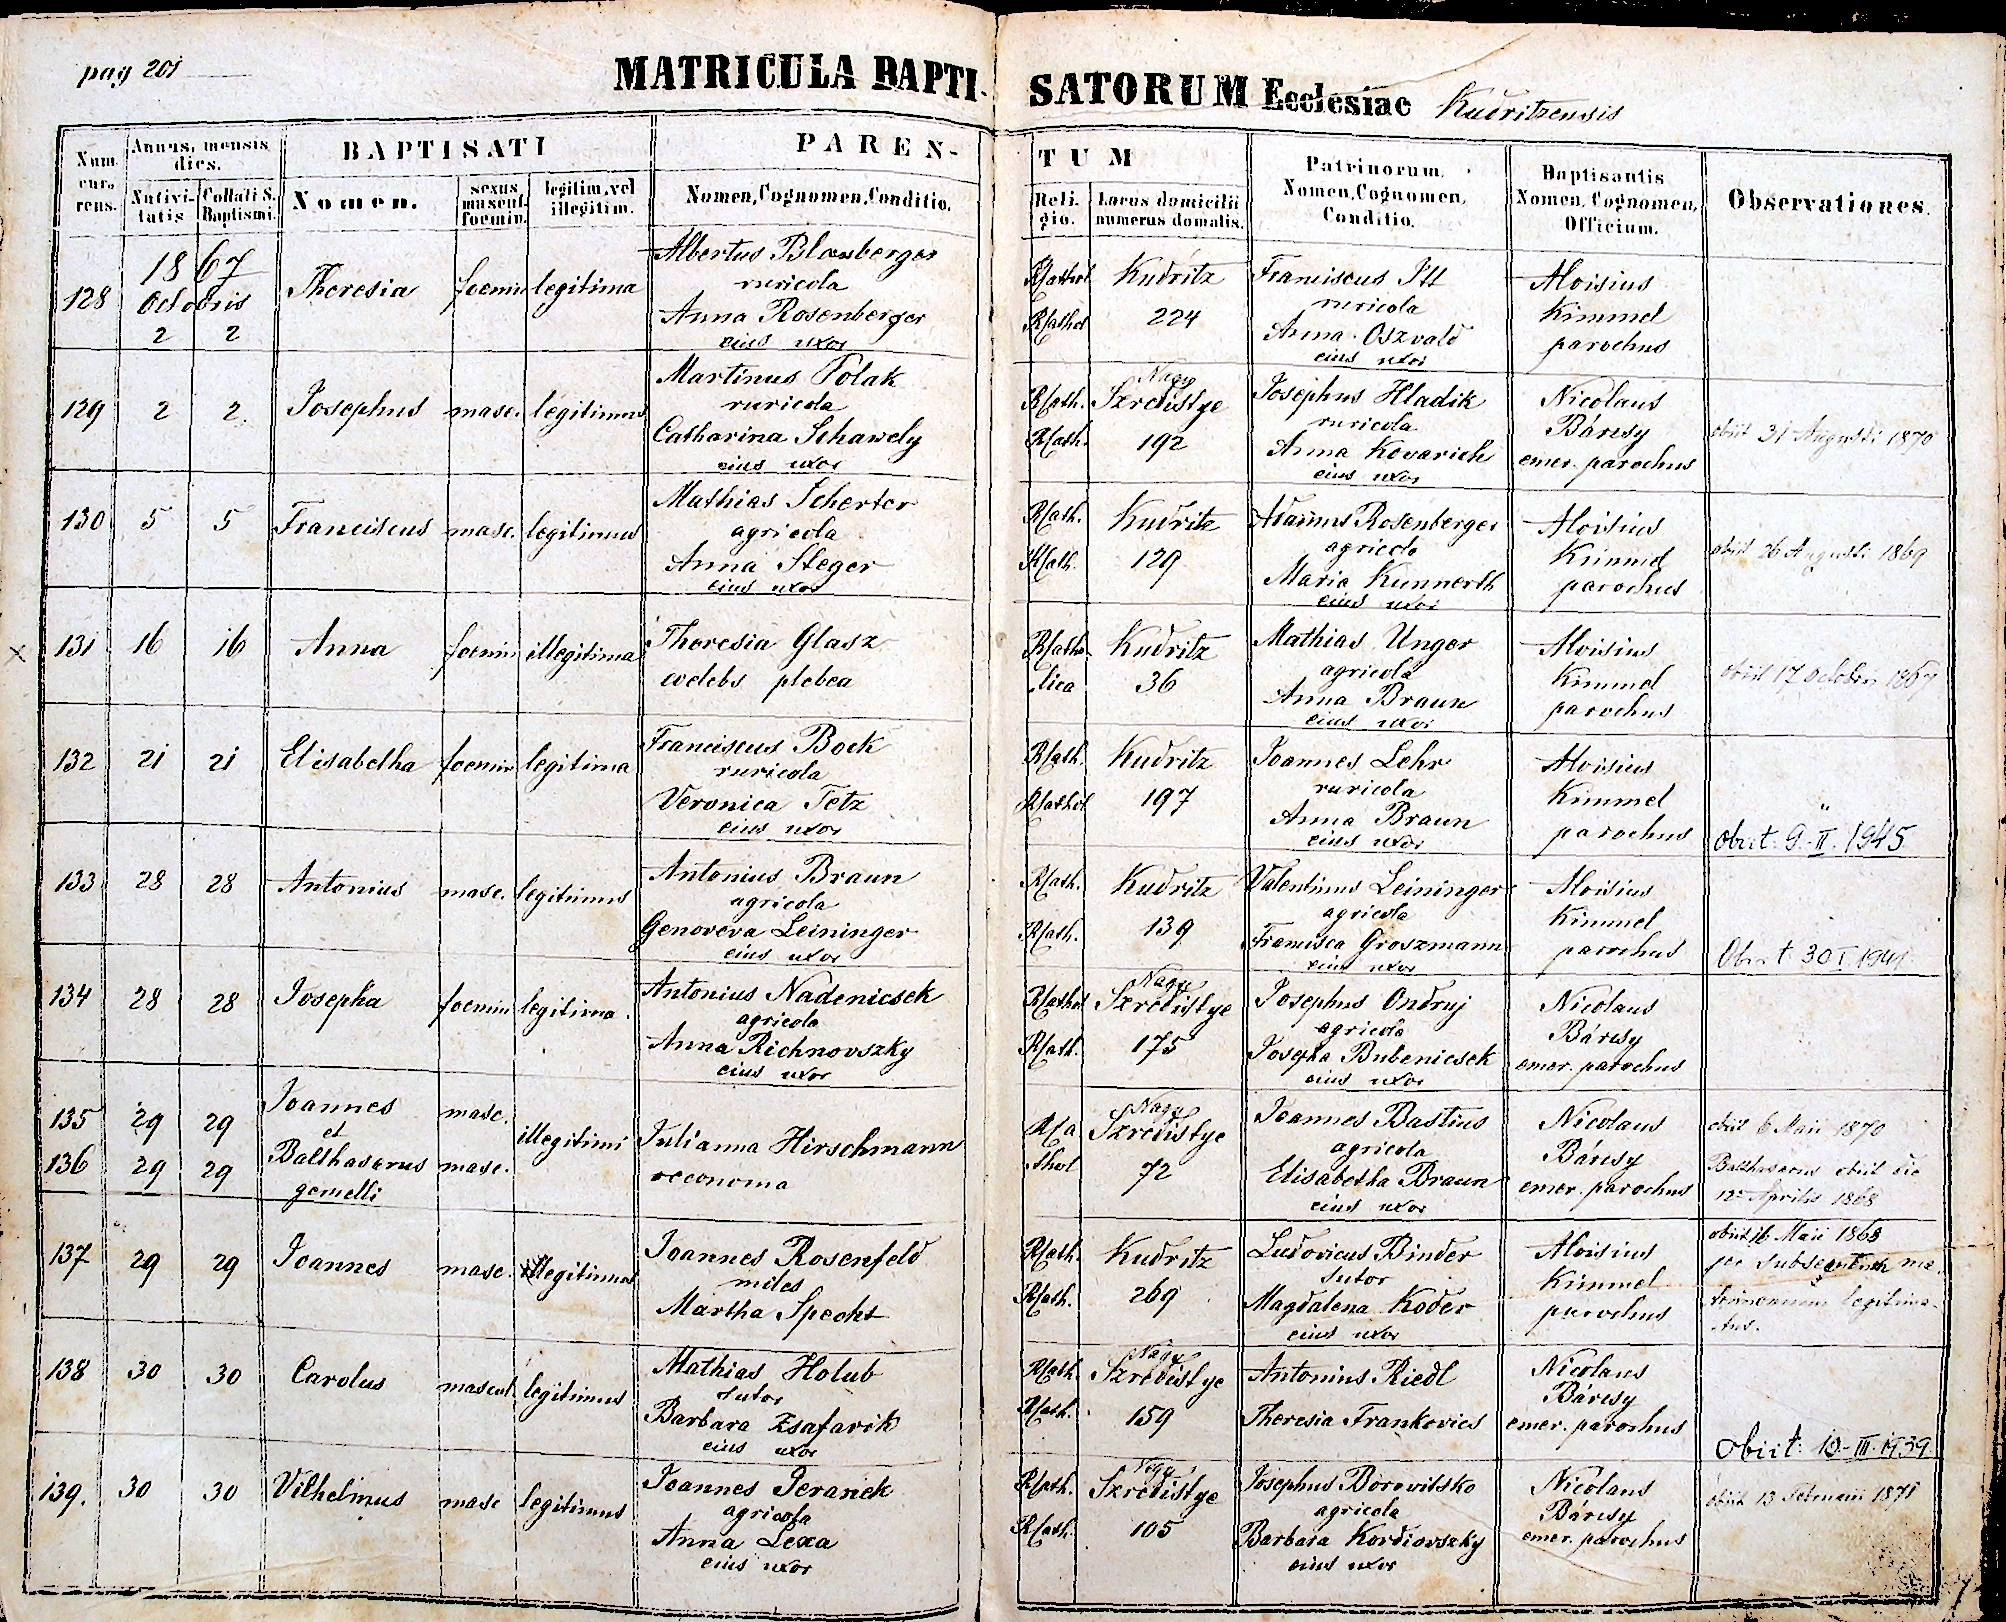 images/church_records/BIRTHS/1852-1870B/201